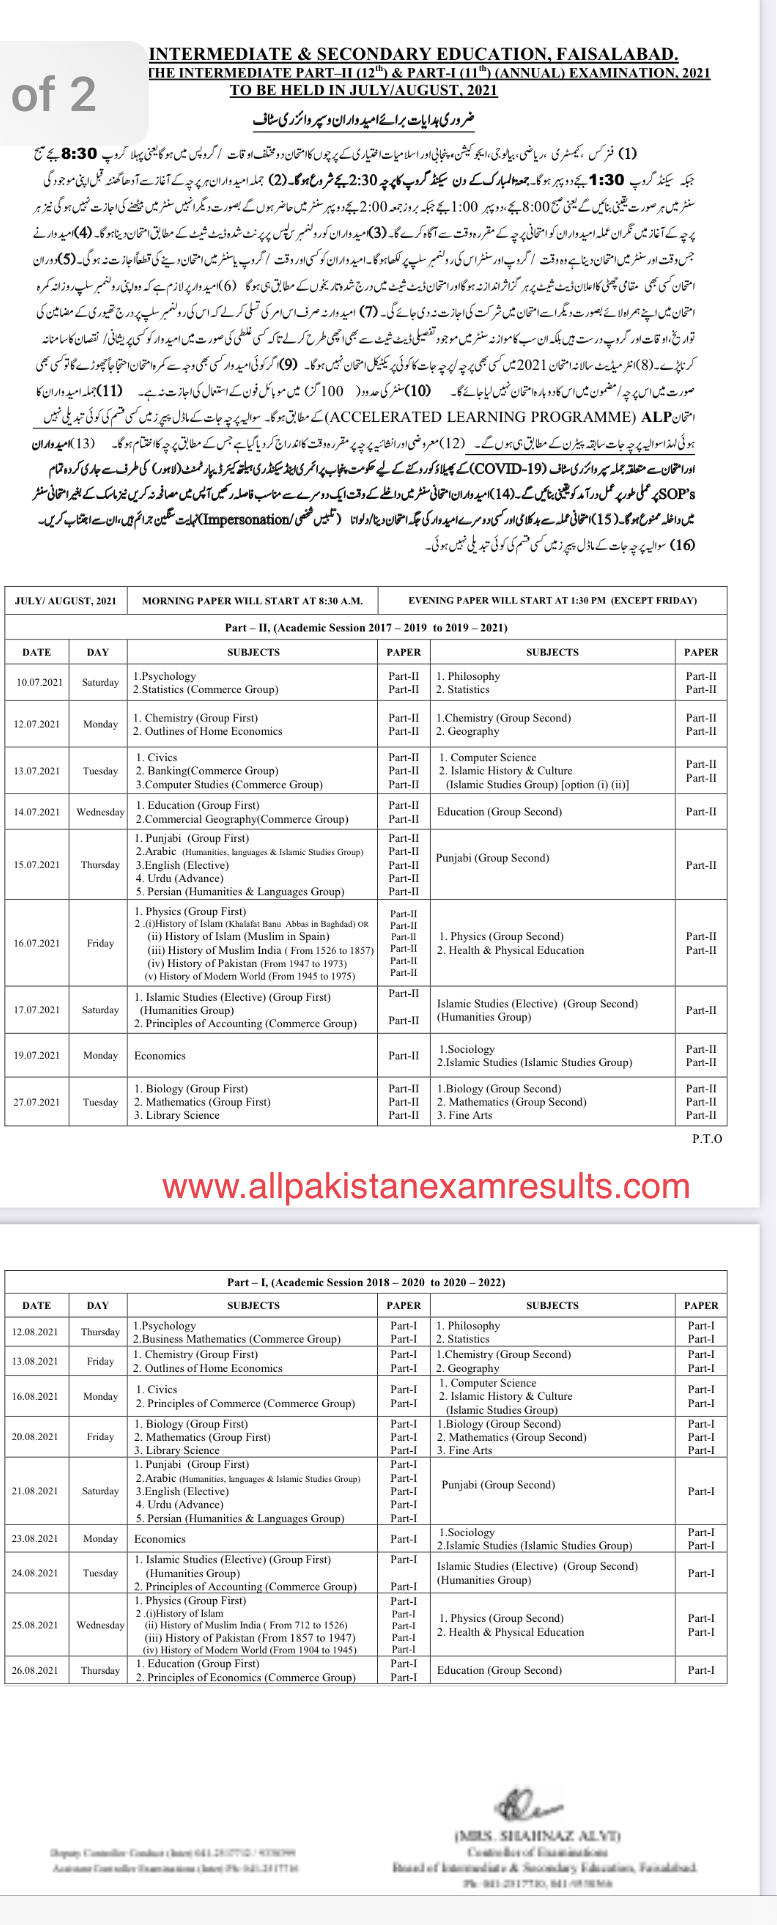 Date Sheet BISE Faisalabad Inter Part 2 2021 Annual Exam